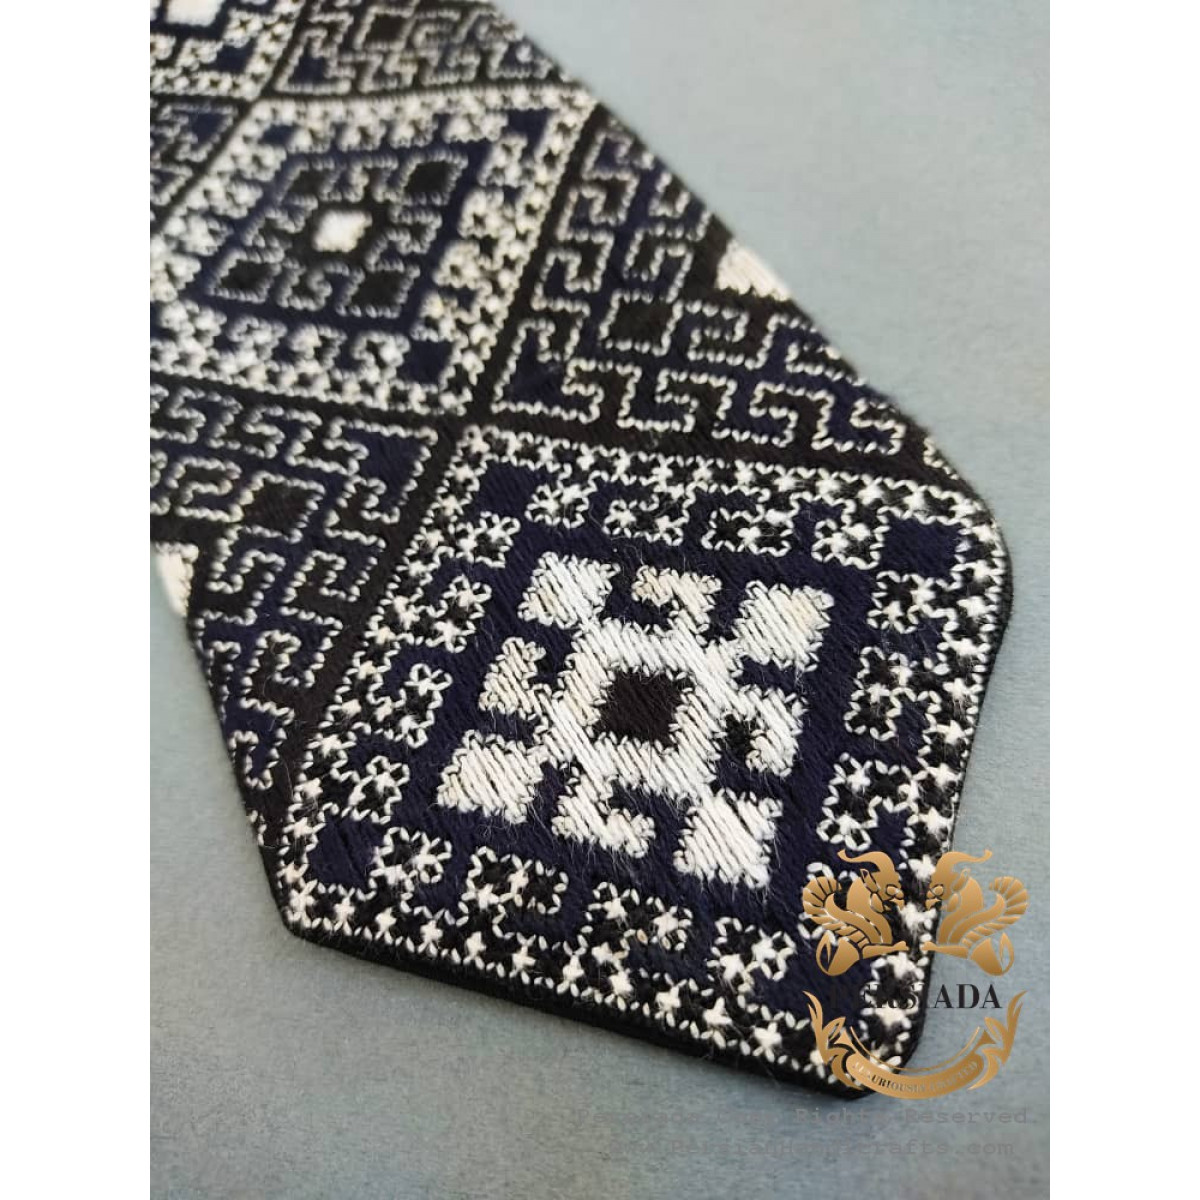 Tie Pocket Handkerchief Set | Balouch Needlework | PHW2003-Persiada Persian Handicrafts